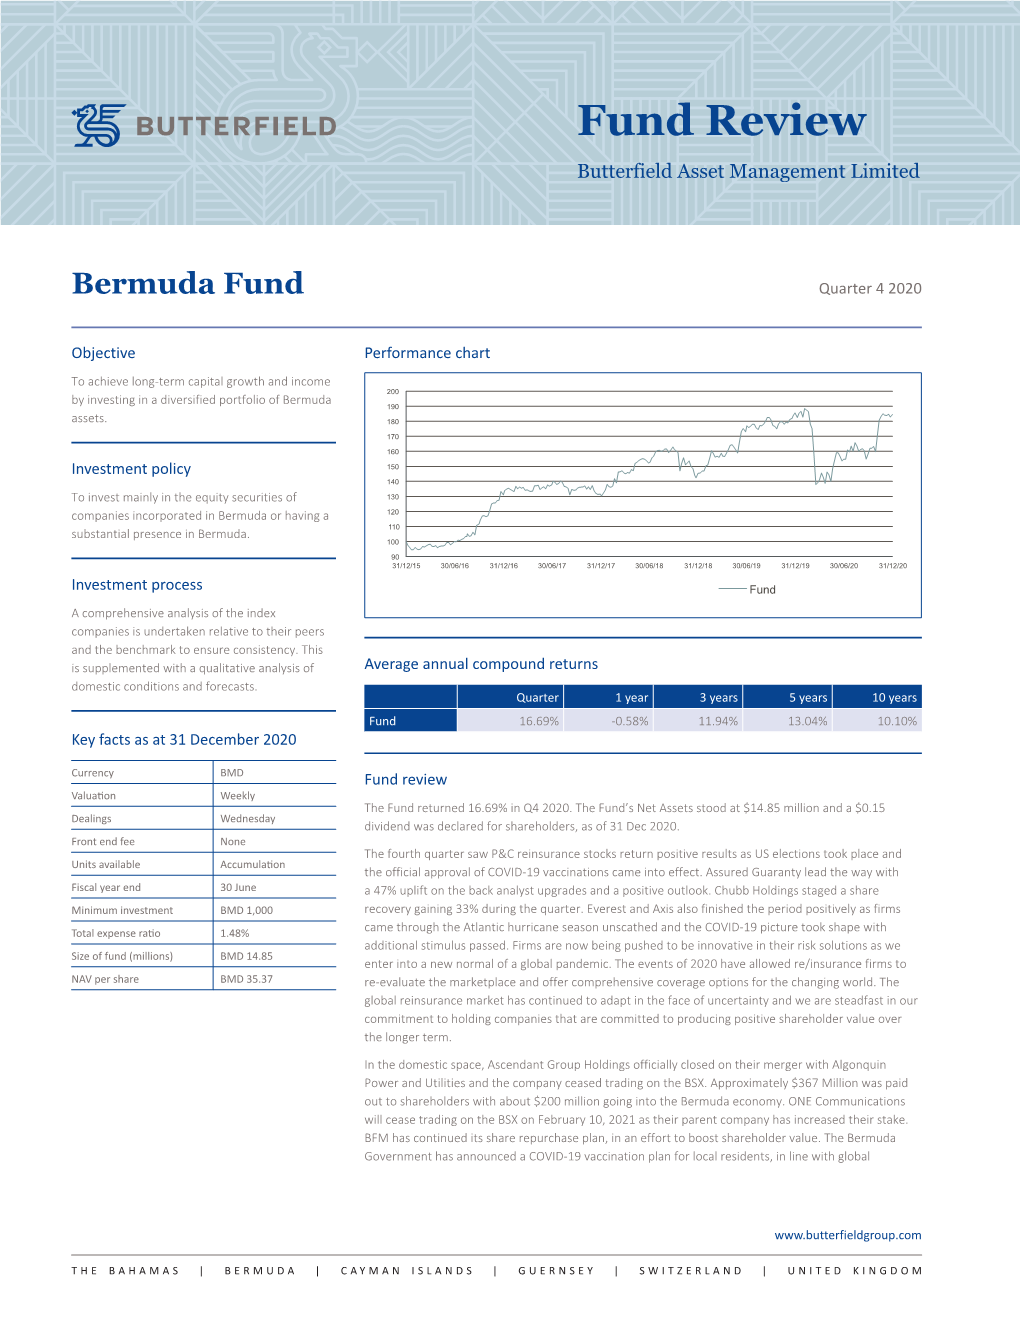 Bermuda Fund Quarter 4 2020